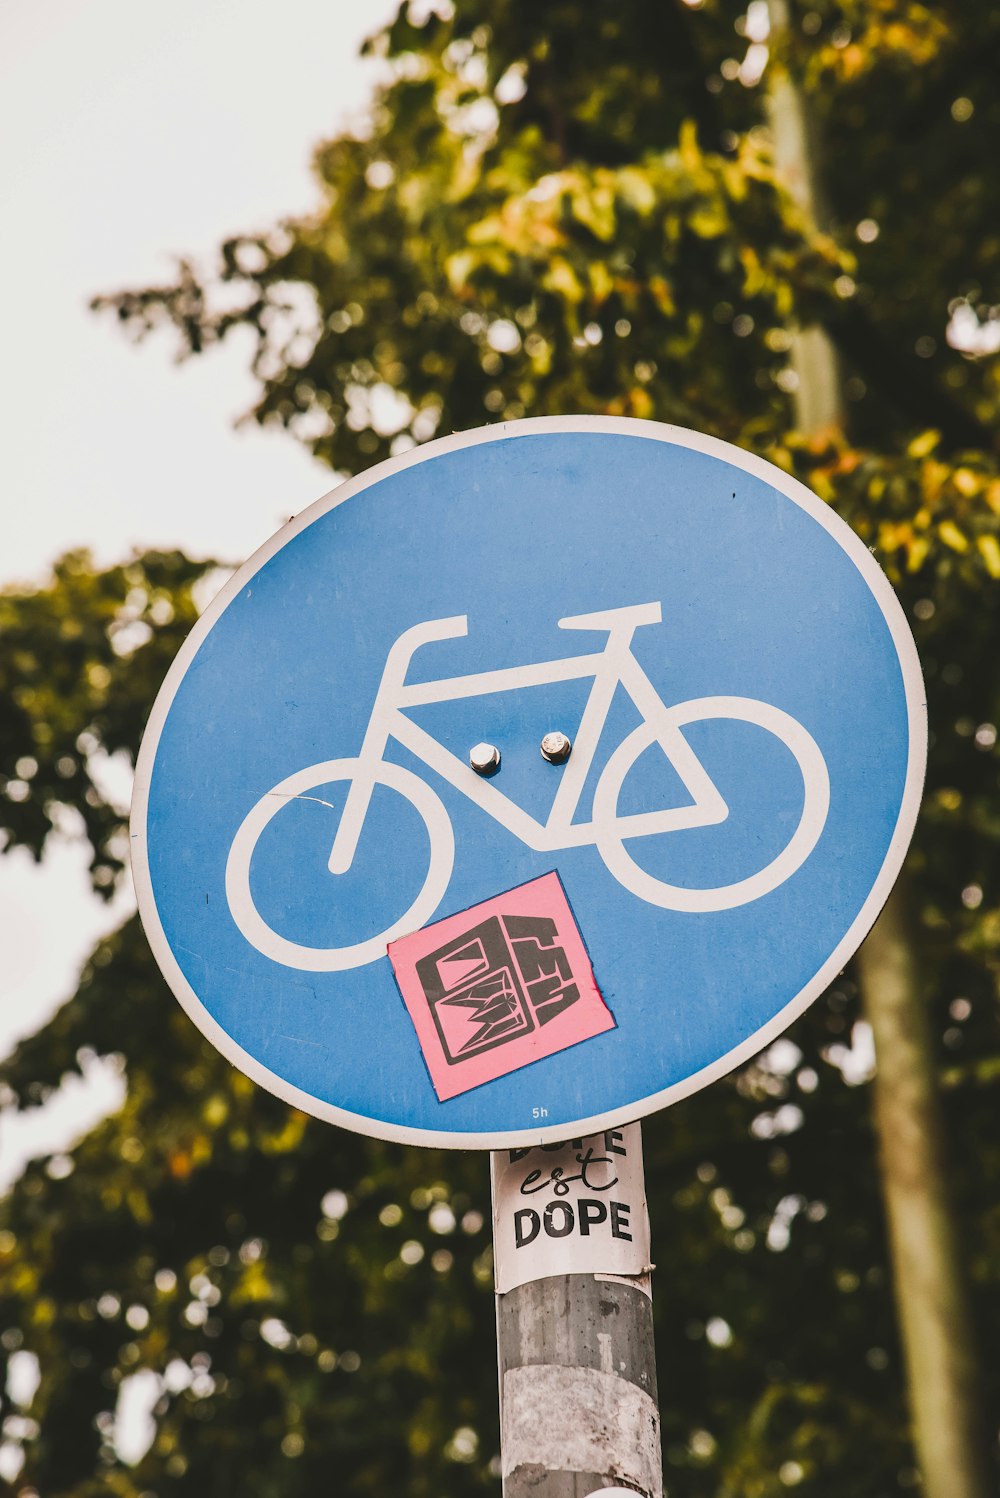 bike lane signage